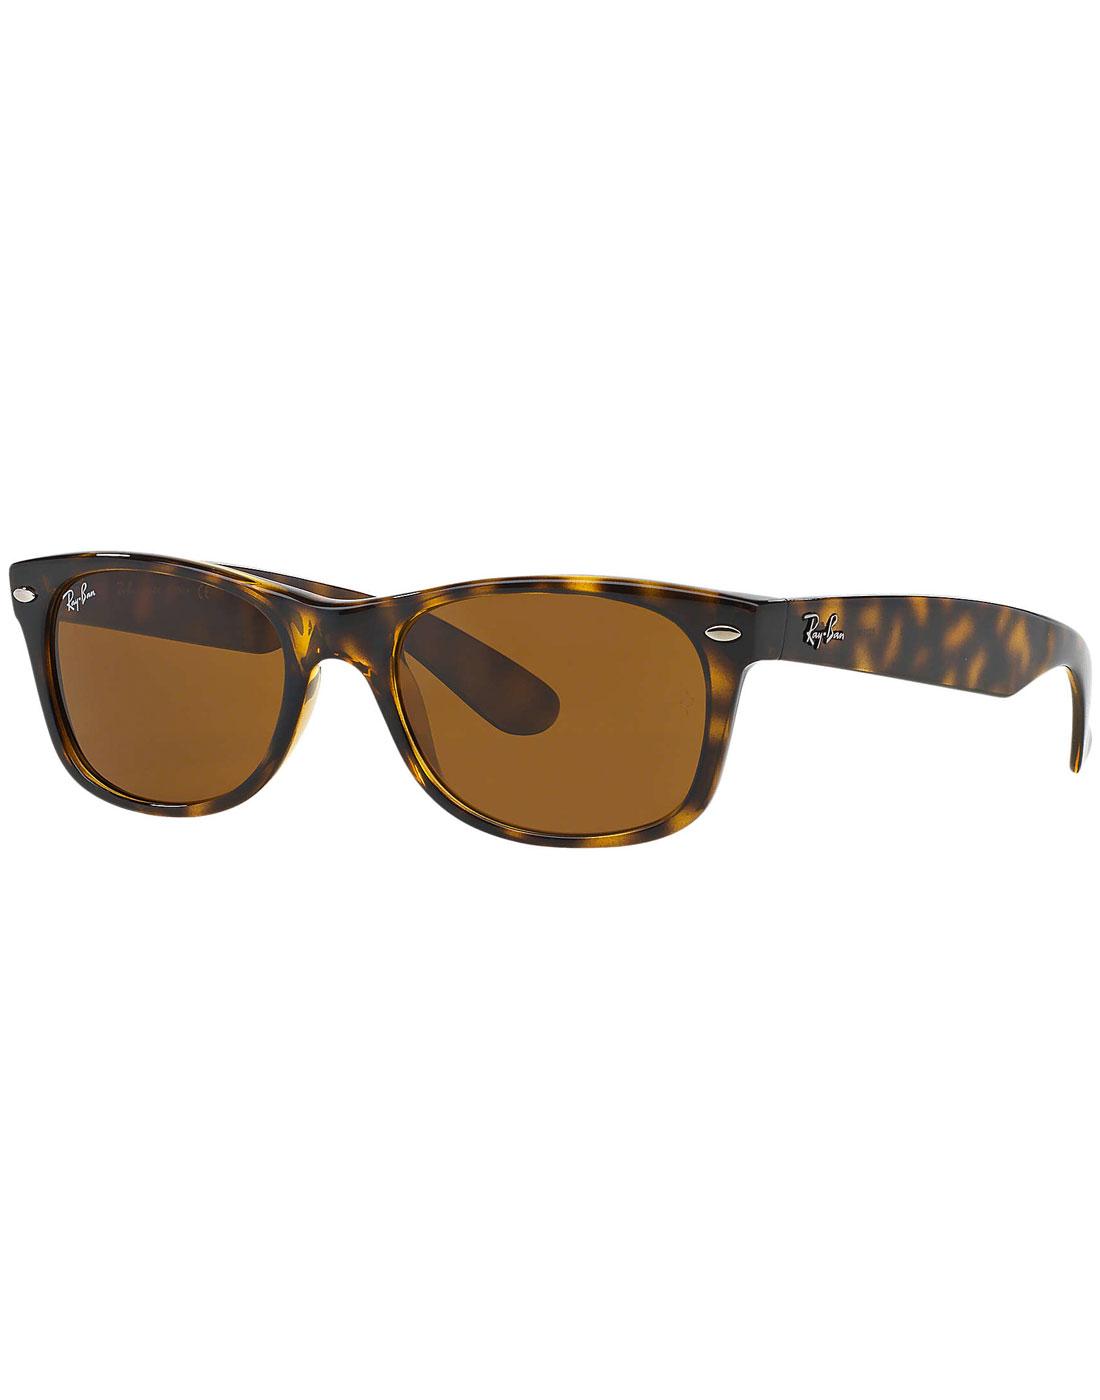 New Wayfarer RAY-BAN Mod Tortoise Brown Sunglasses